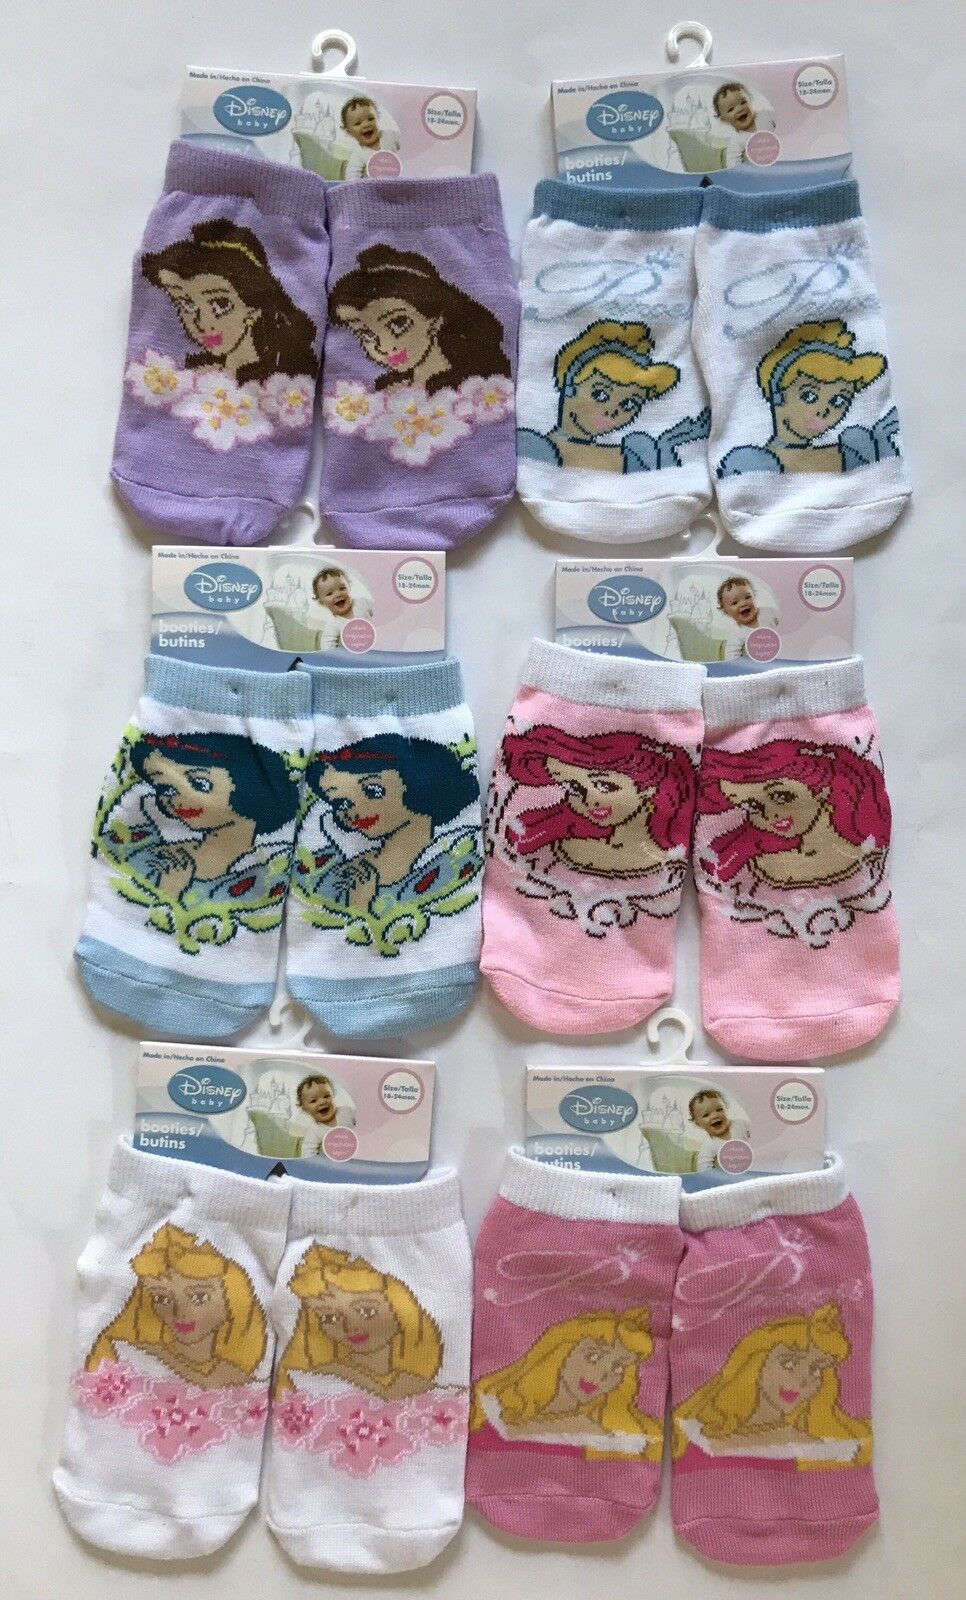 Disney Princesses Infant Toddler Booties Socks 18-24 Month 6 Designs New